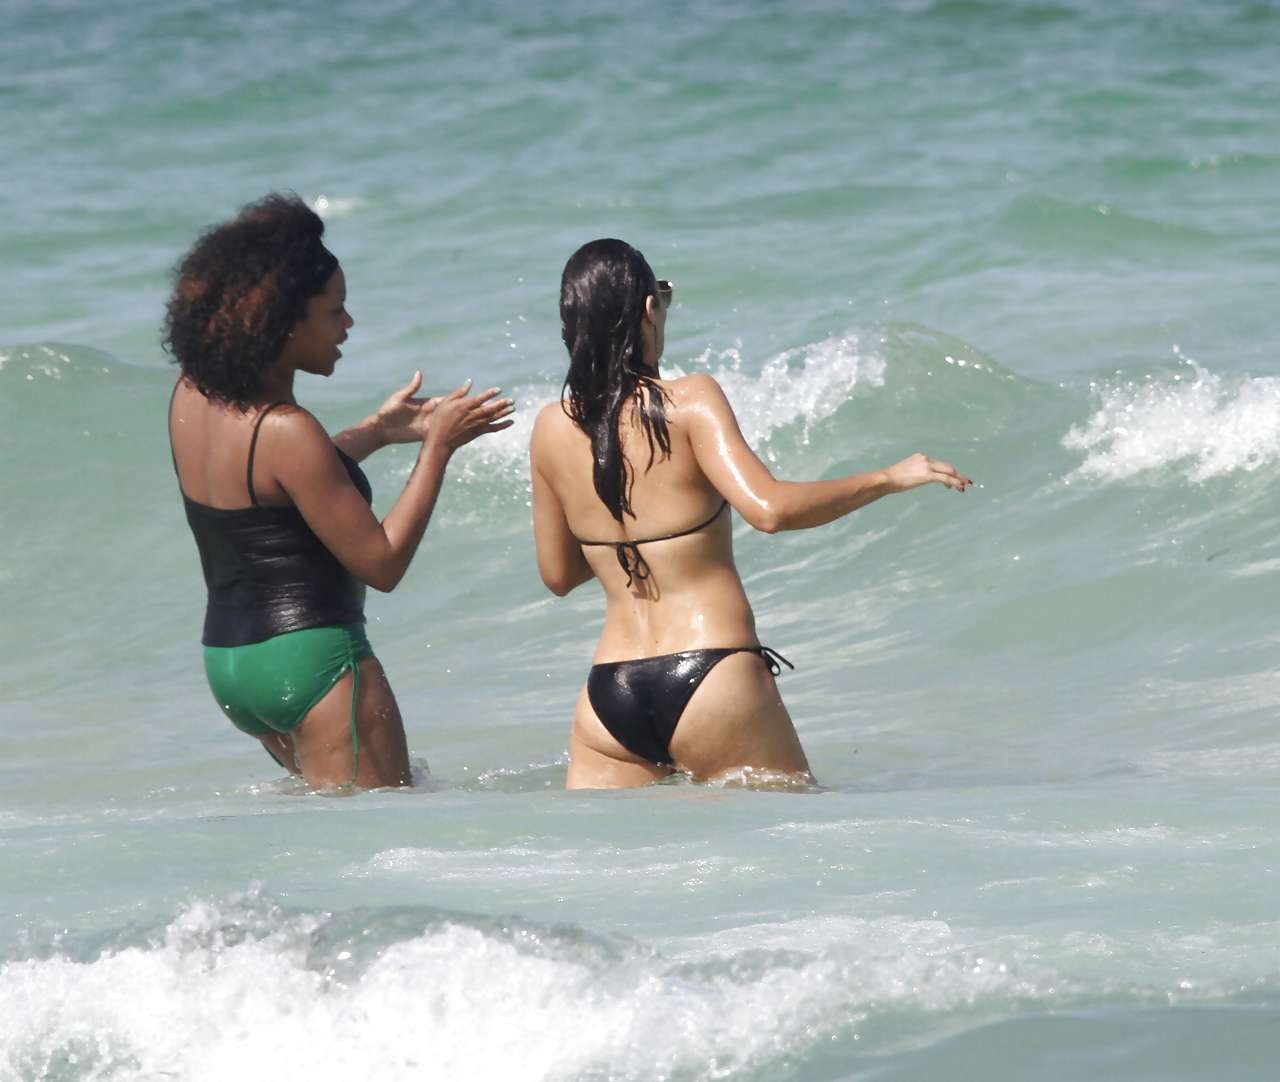 Paula Patton looking very sexy in skimpy black bikini on beach paparazzi picture #75296564